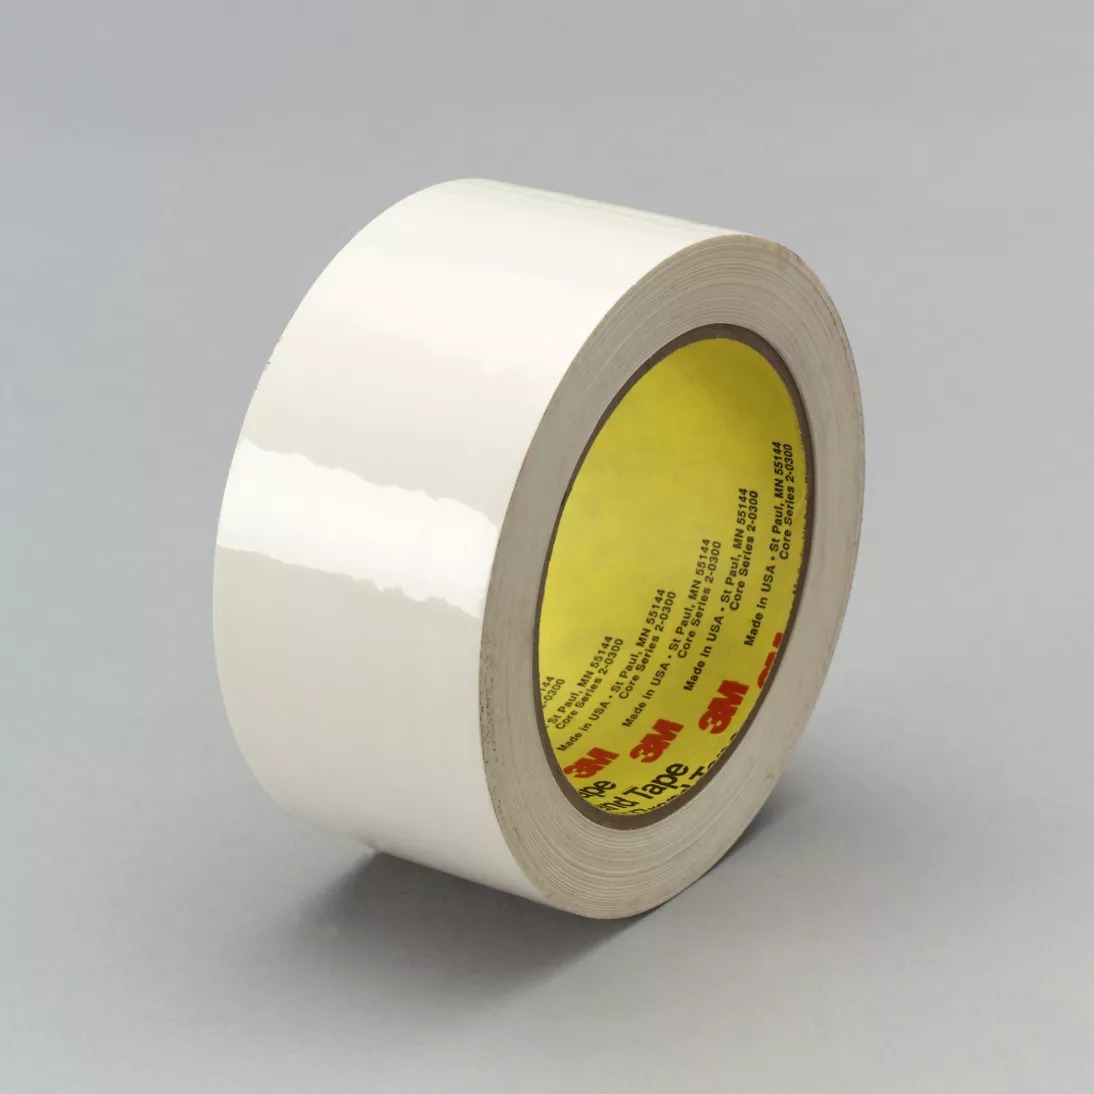 3M™ Polyethylene Tape 483, White, 3 in x 36 yd, 5.0 mil, 12 rolls per
case